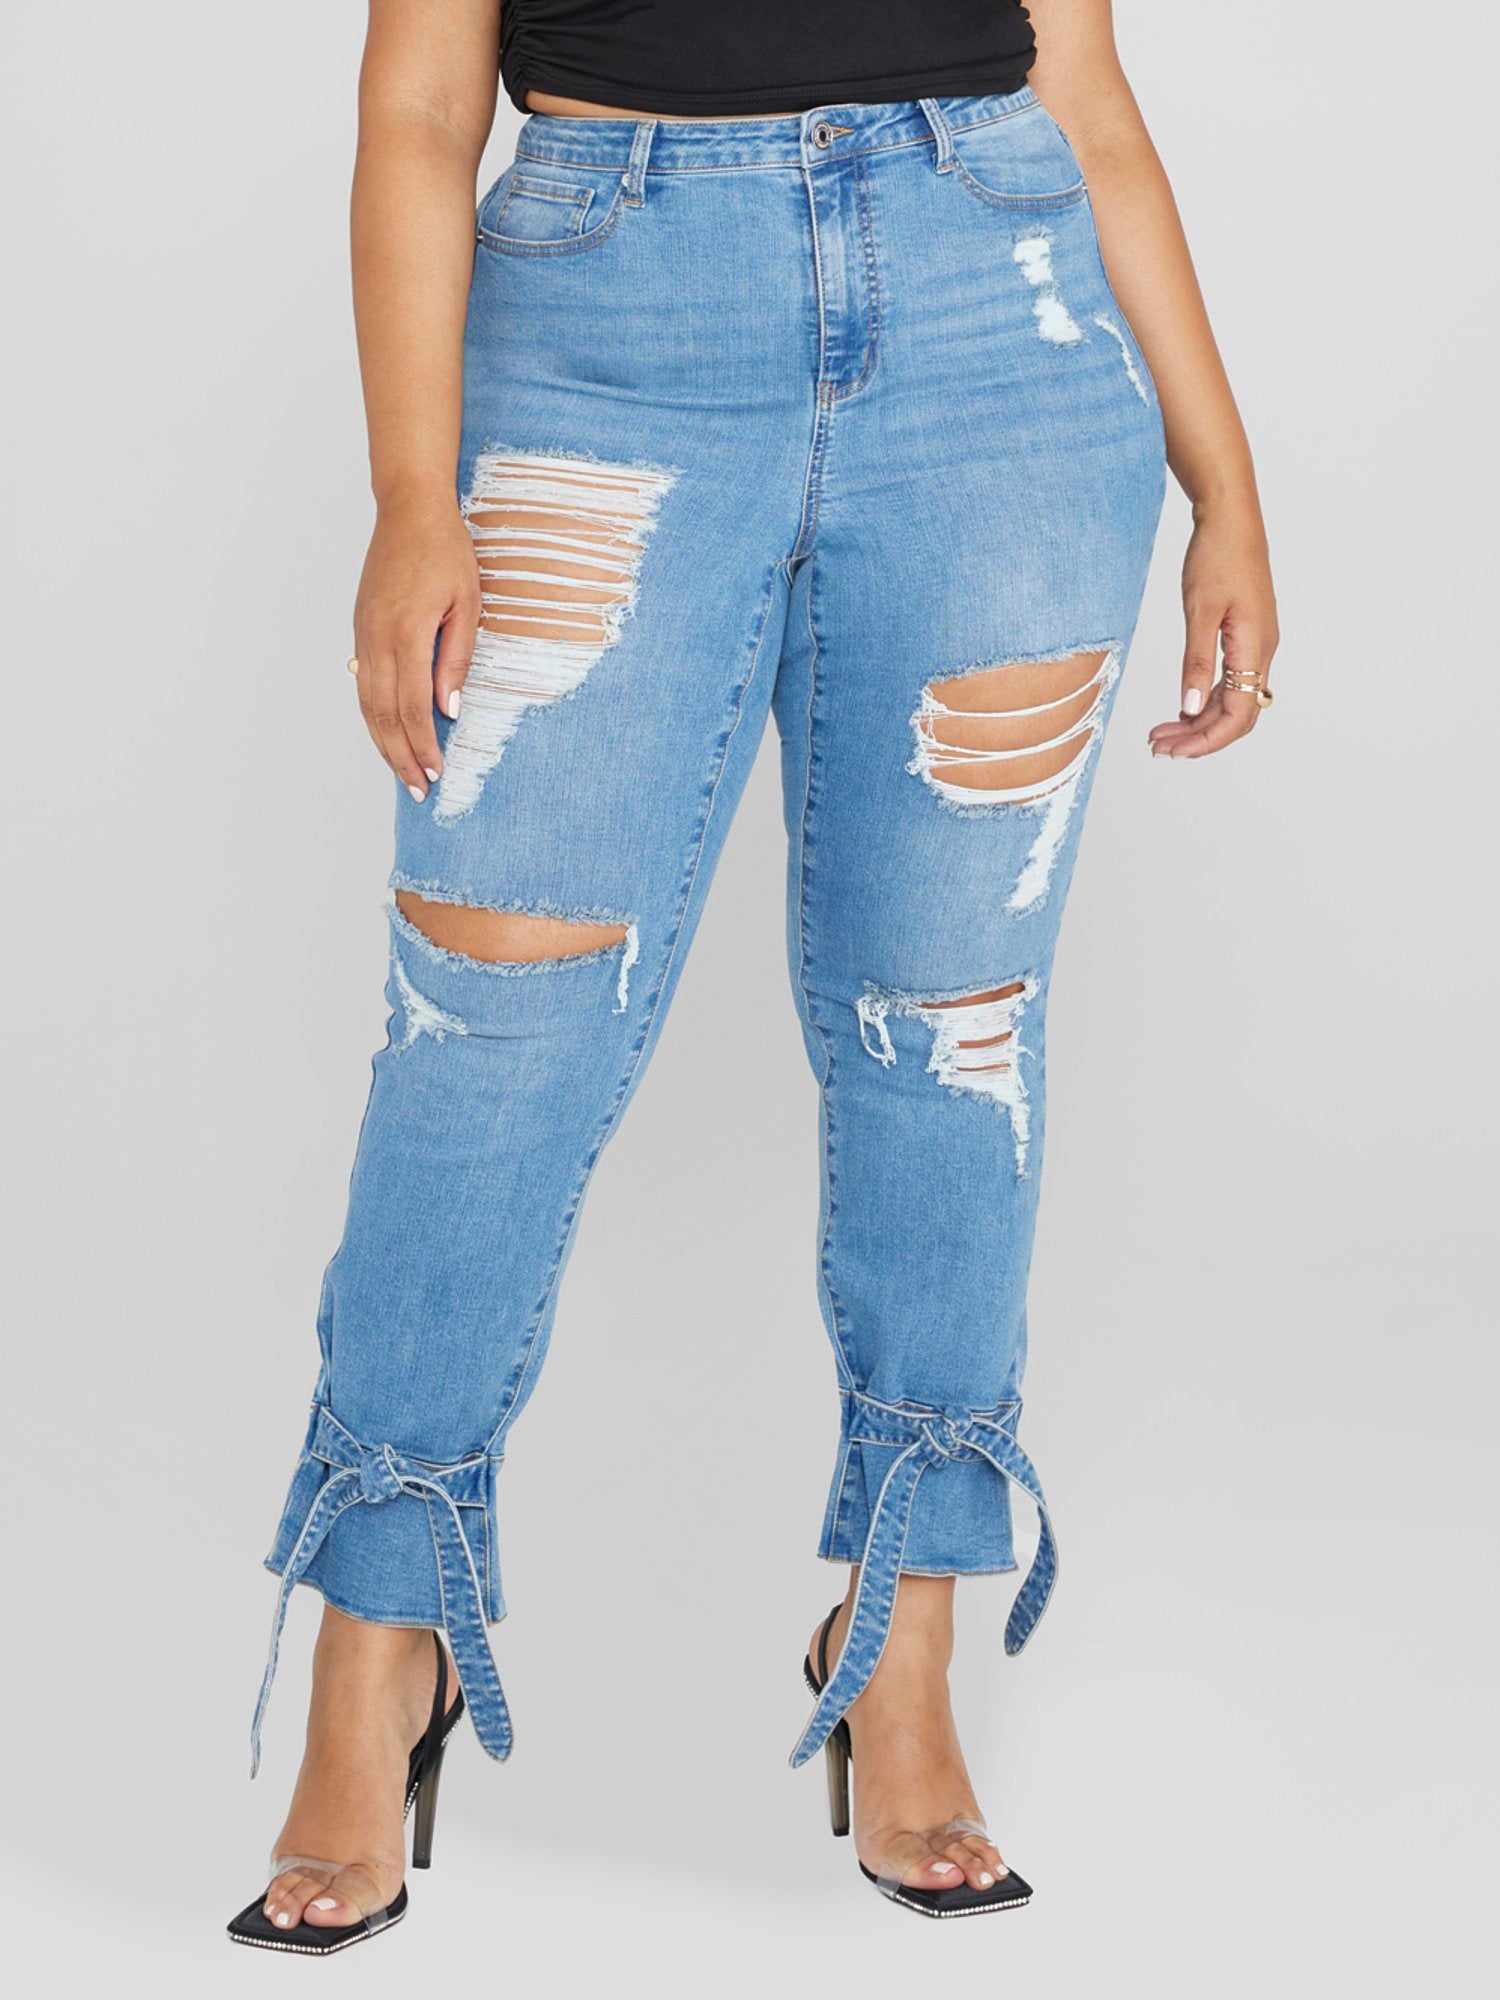 Plus Size Jeans - Plus Size Women's Jeans, Fashion Nova